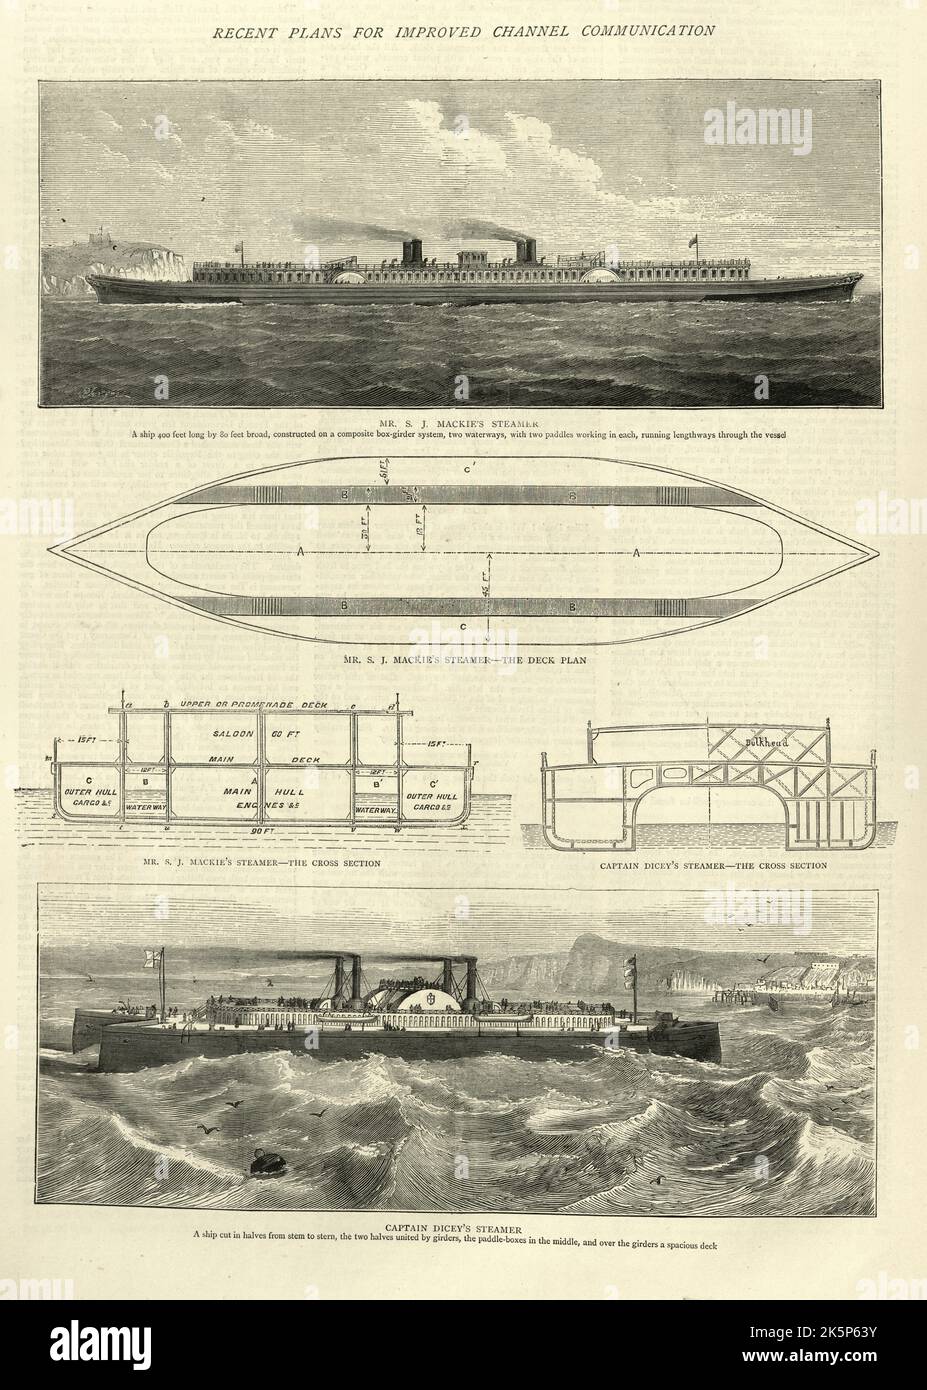 Pale a vapore vittoriano, 1870s ° secolo, 19th °. S J Mackie e Captain Dicey's. Foto Stock